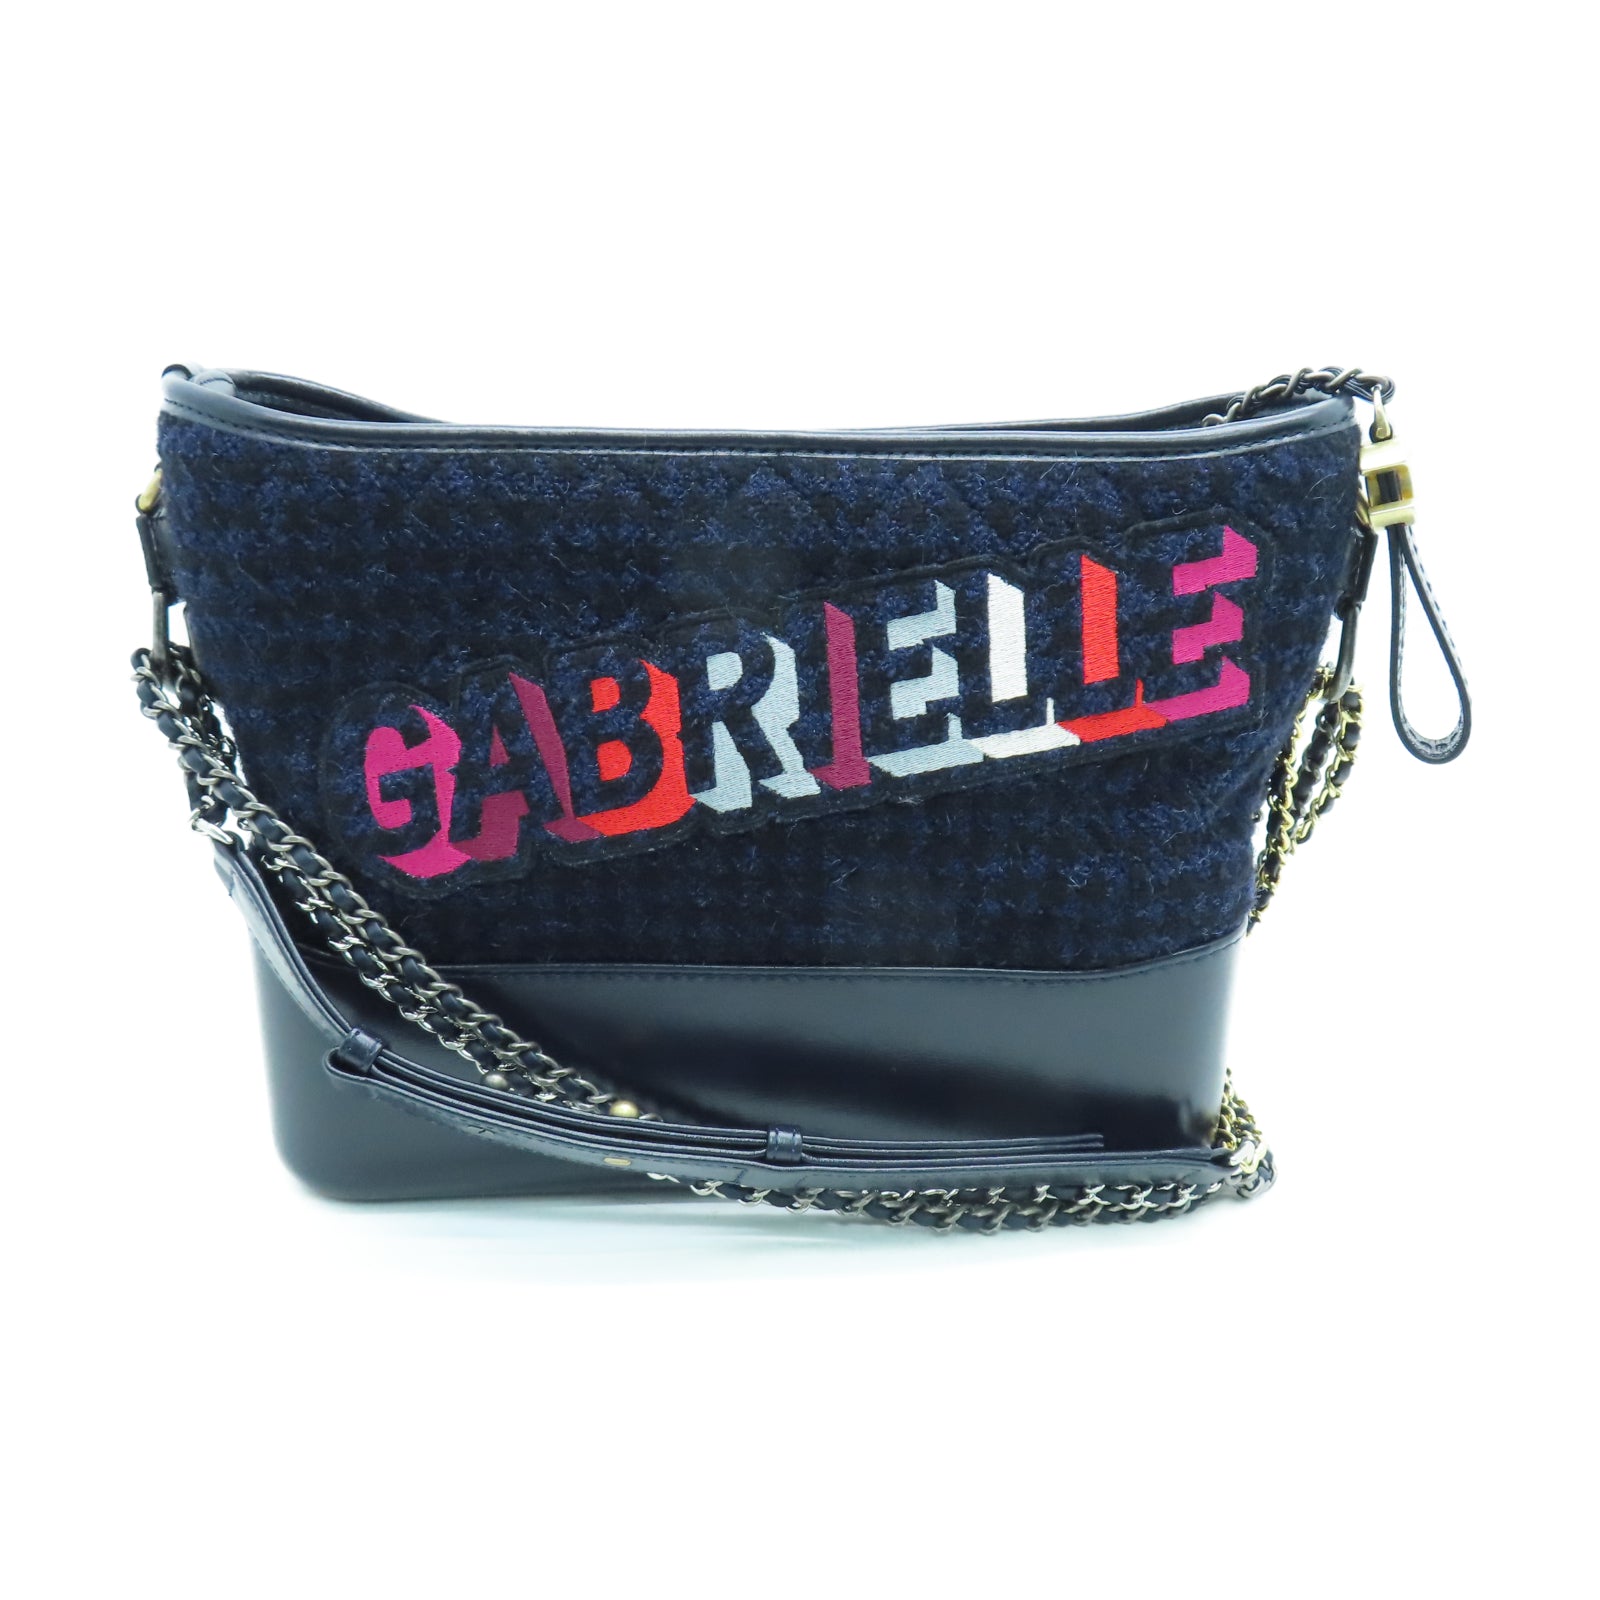 Chanel Gabrielle small black bag – A Piece Lux